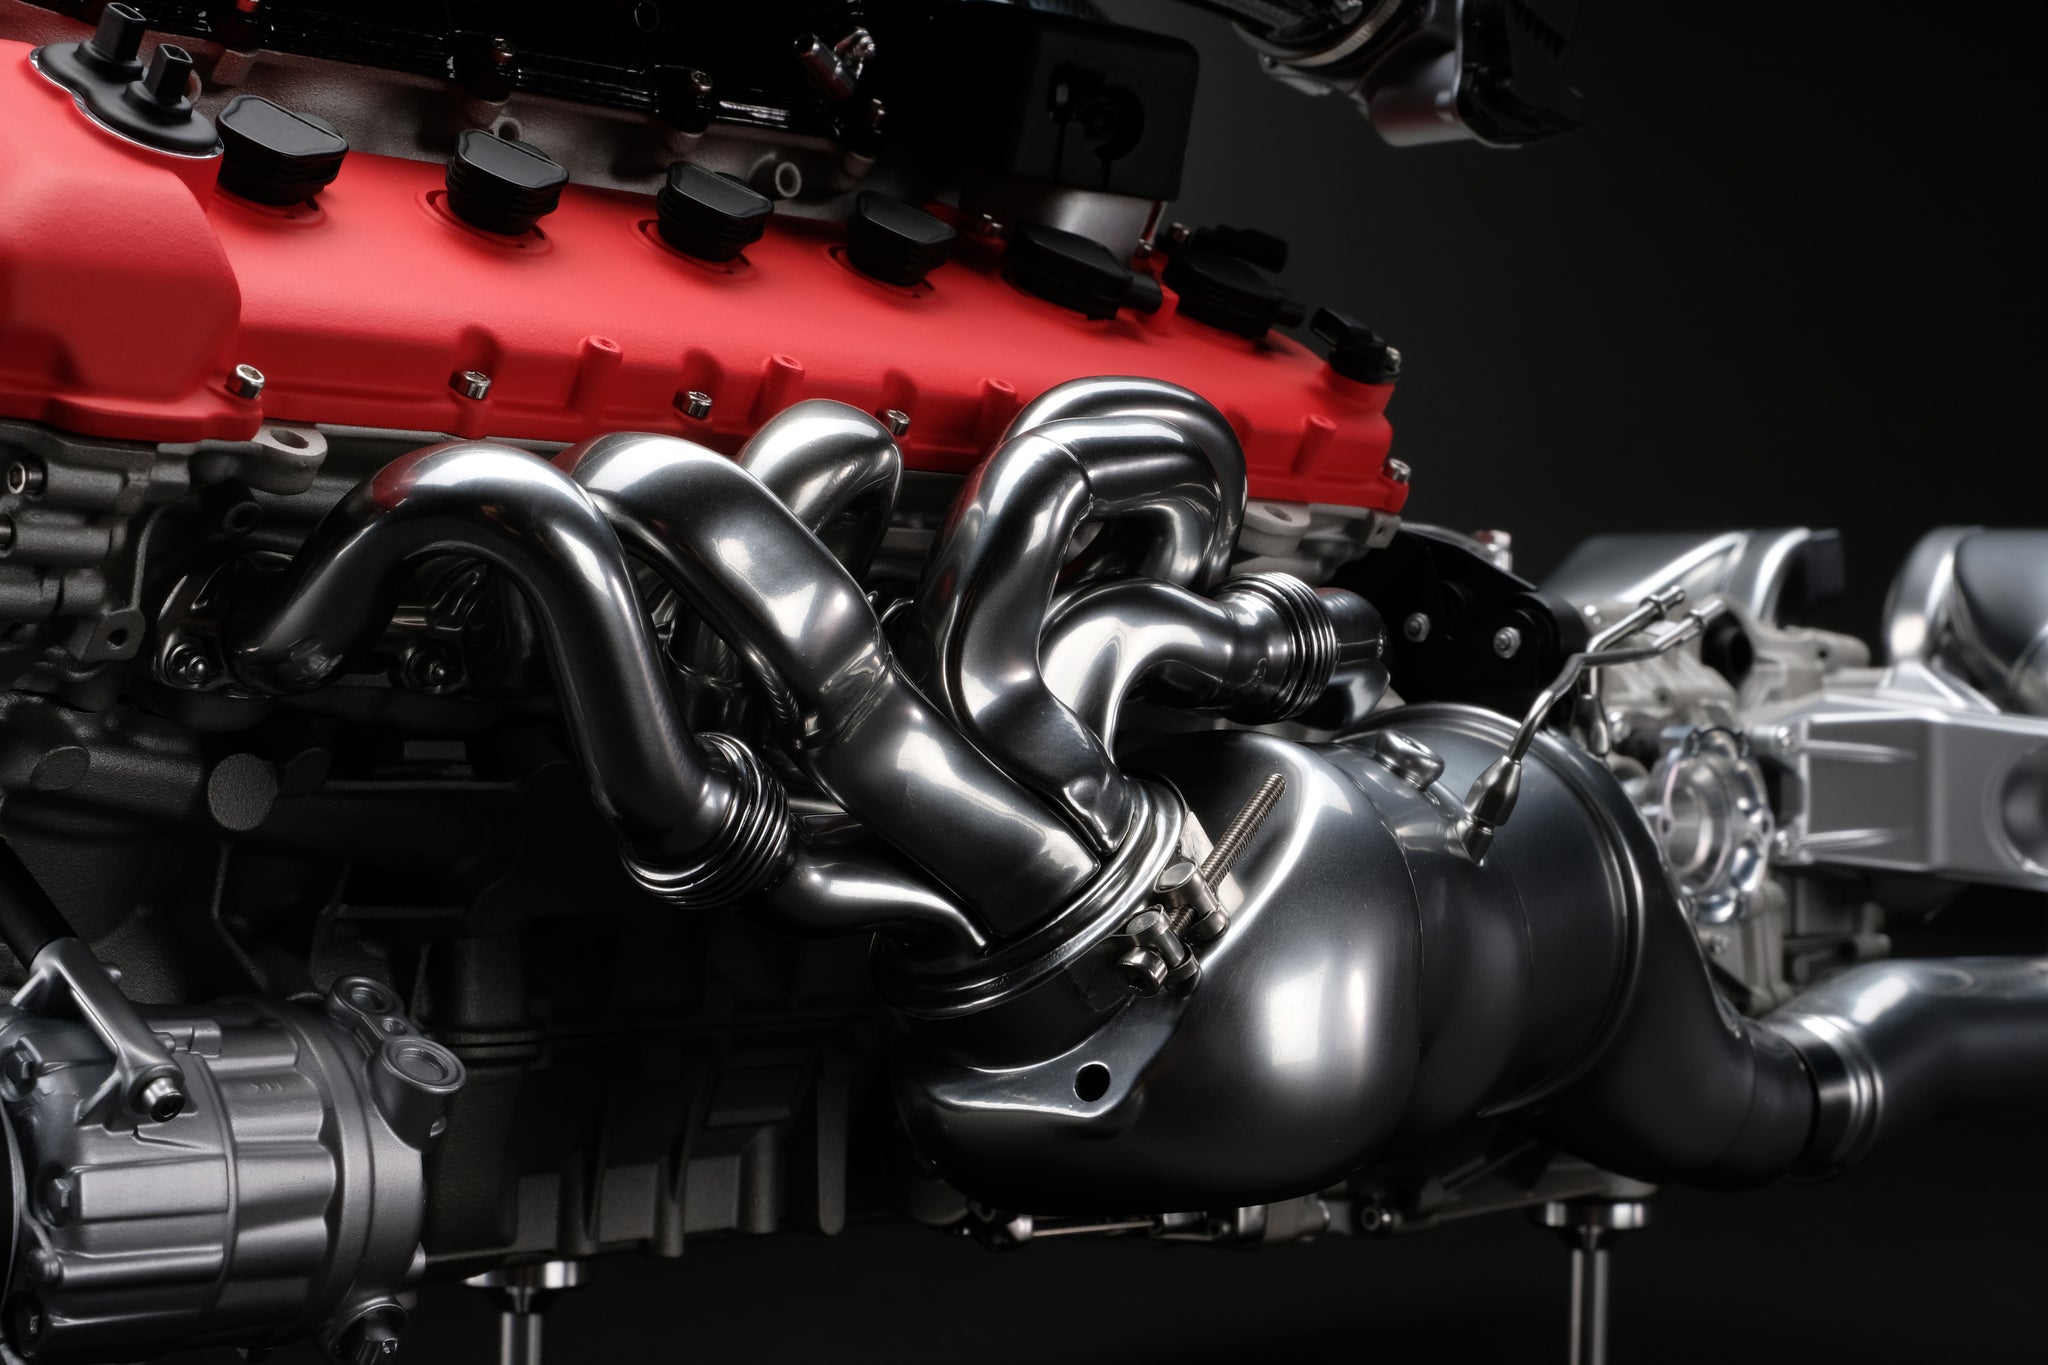 Ferrari Daytona SP3 Engine and Gearbox 1.4 Scale Replica by Amalgam Collection